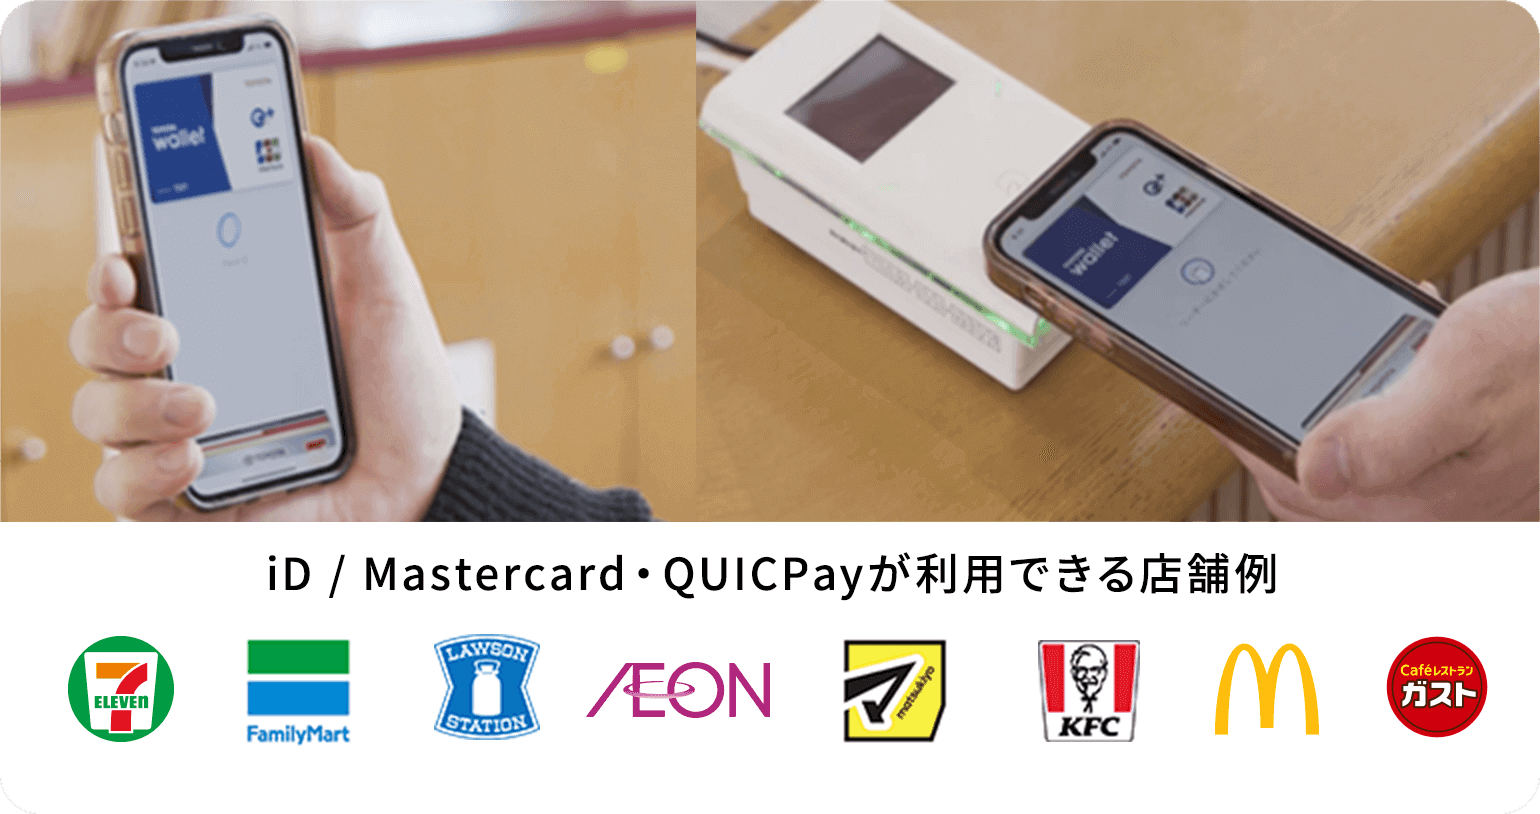 iD/Mastercard・QUICKPayが利用できる店舗例